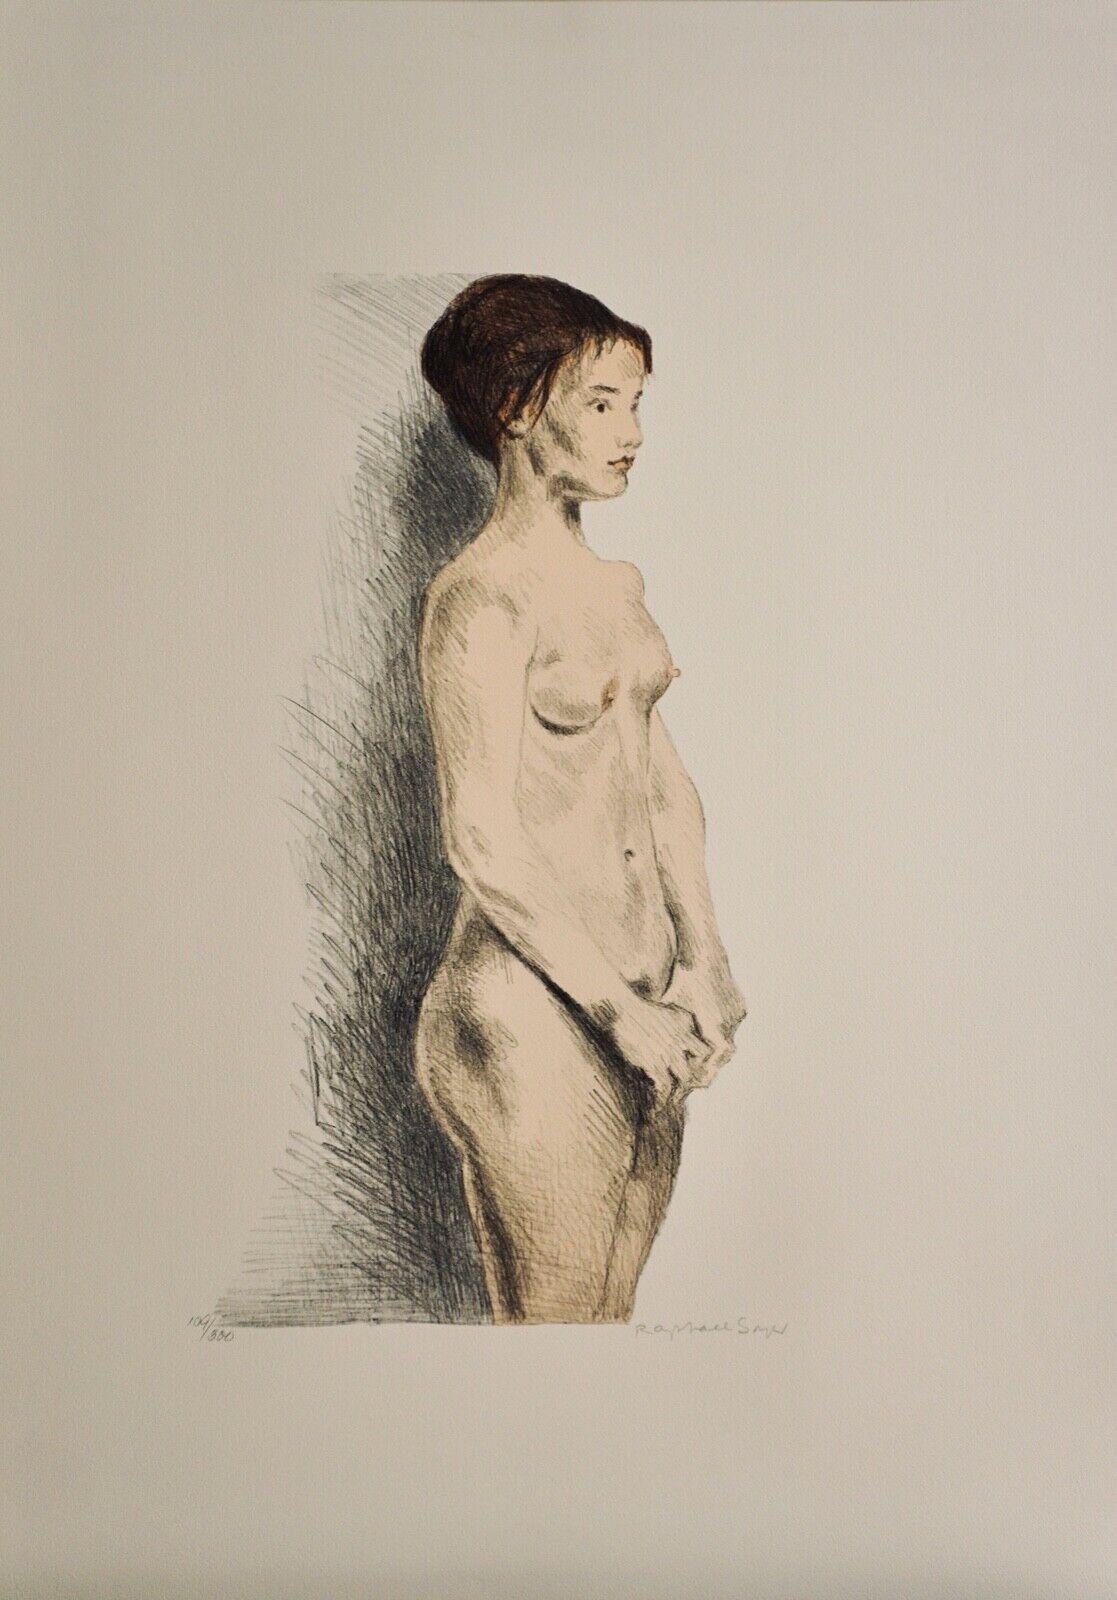 Nude Woman Portfolio - Contemporary Print by Raphael Soyer